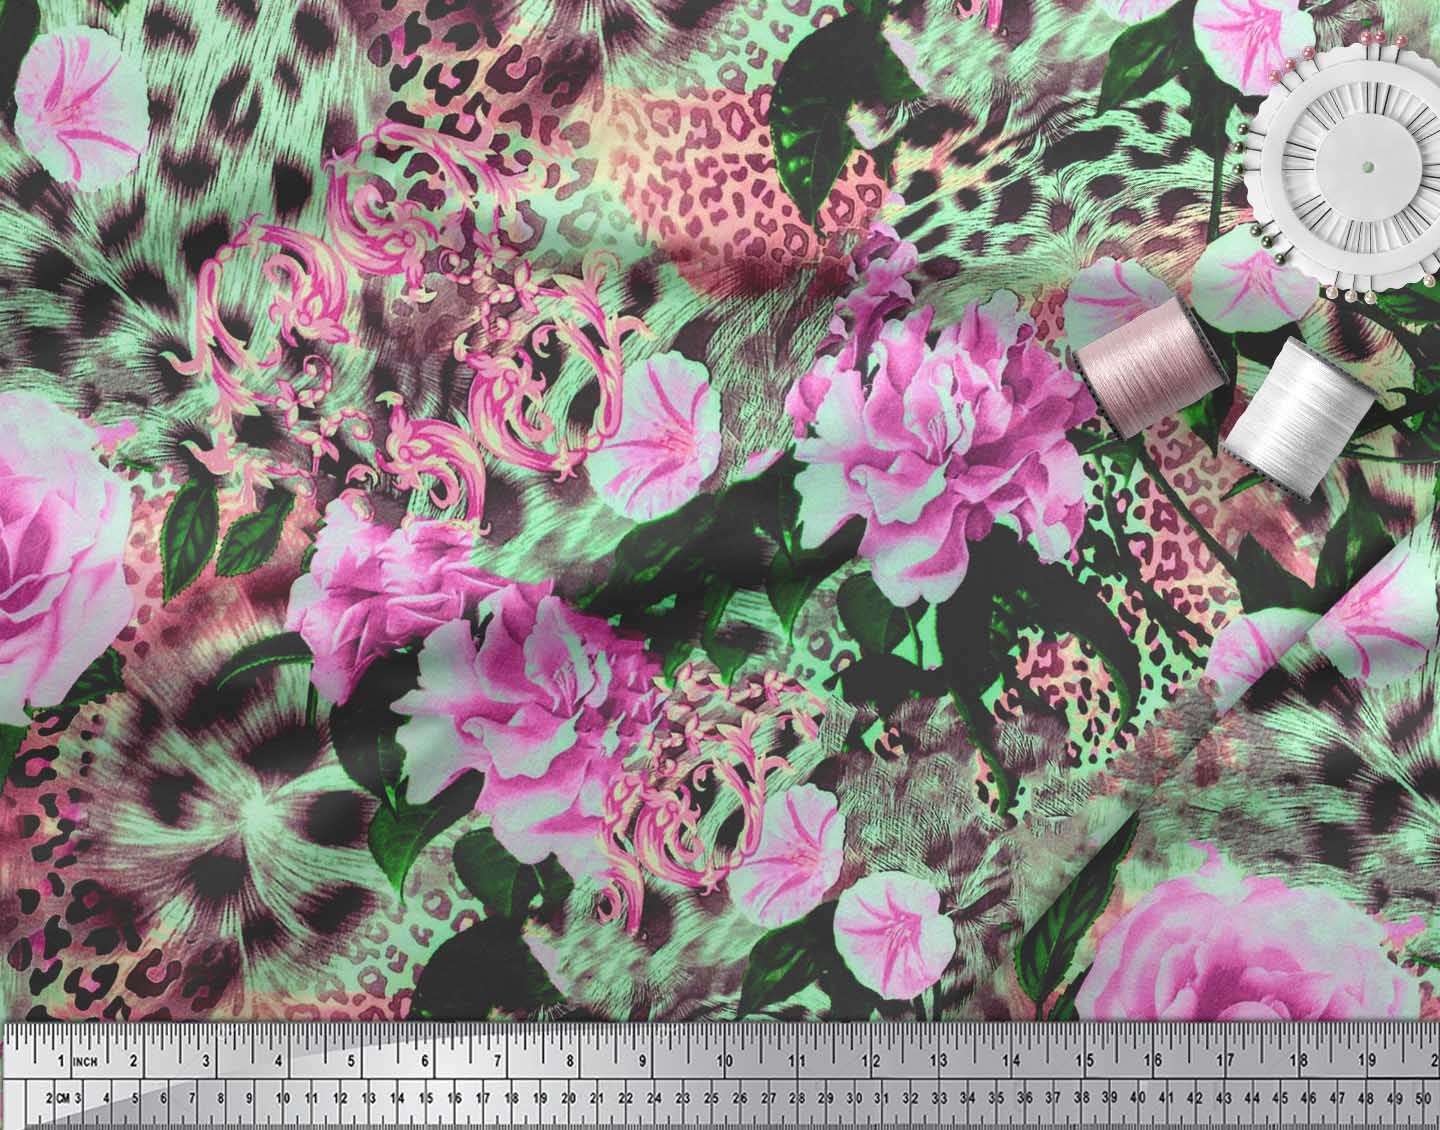 FW-335E Soimoi Fabric Leopard Skin,Leaves & Carnation Flower Print Fabric BTY